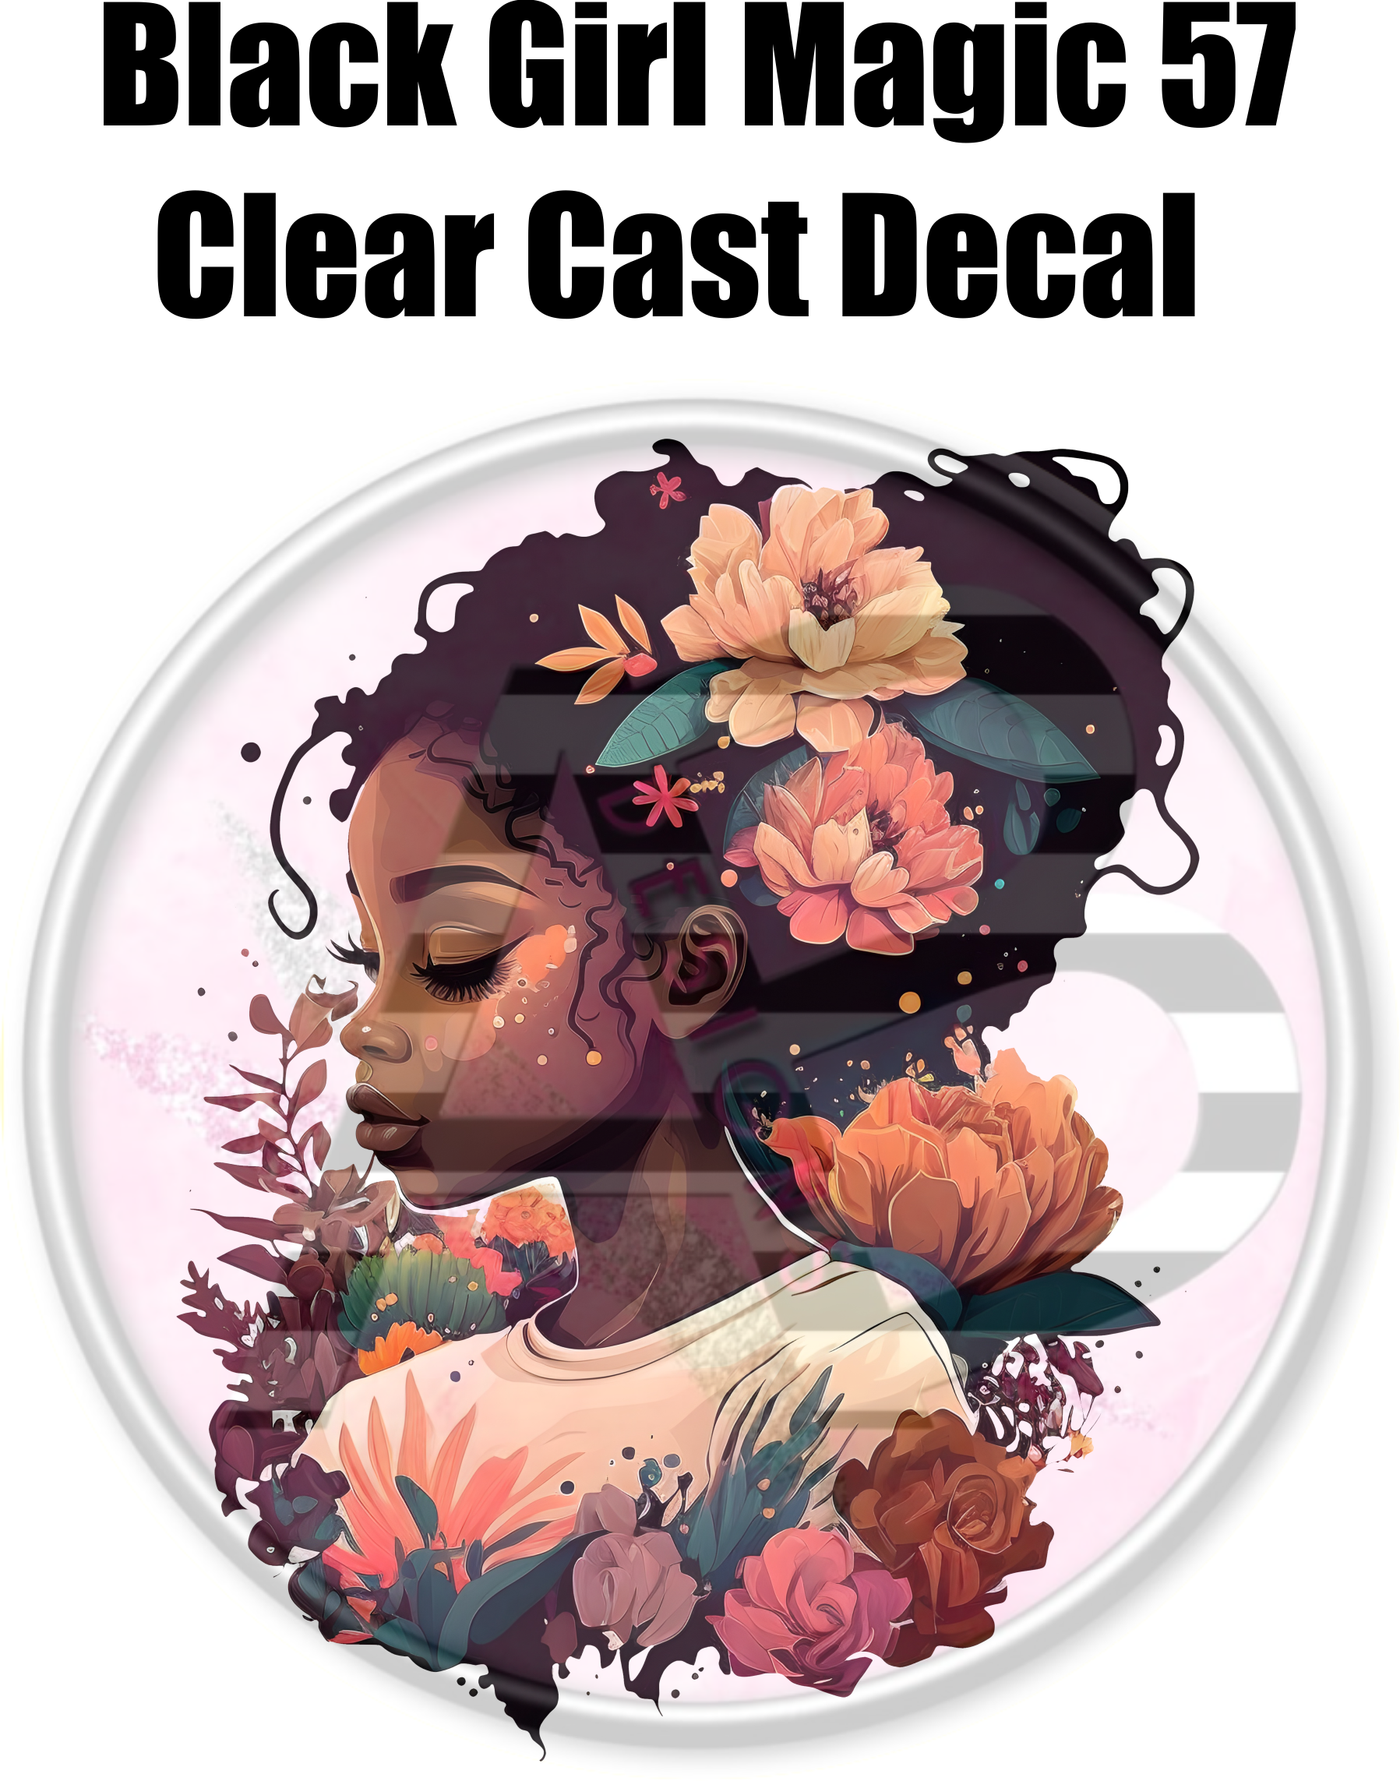 Black Girl Magic 57 - Clear Cast Decal